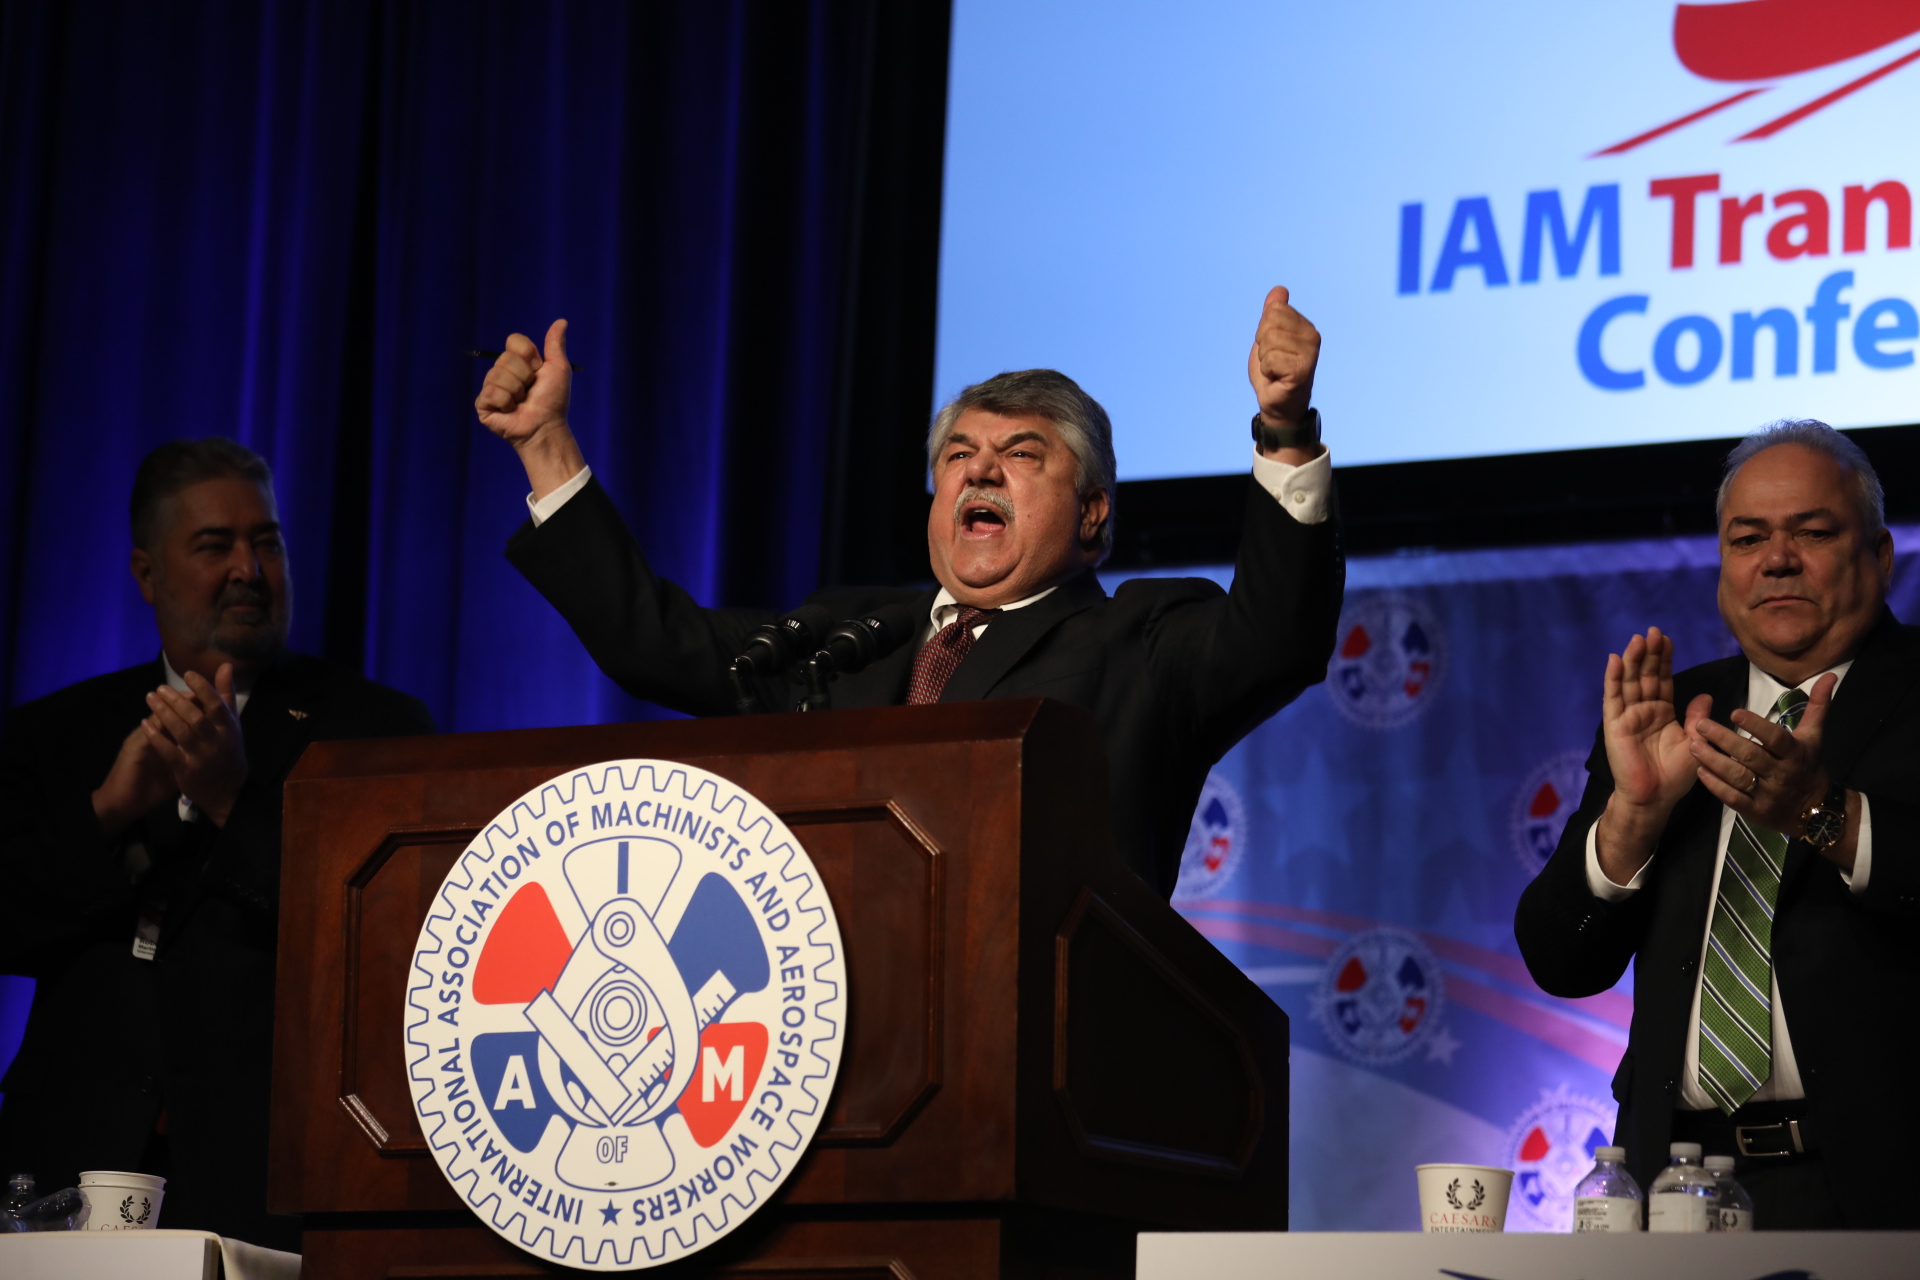 AFL-CIO President Richard Trumka fires up the IAM Transportation Conference. 